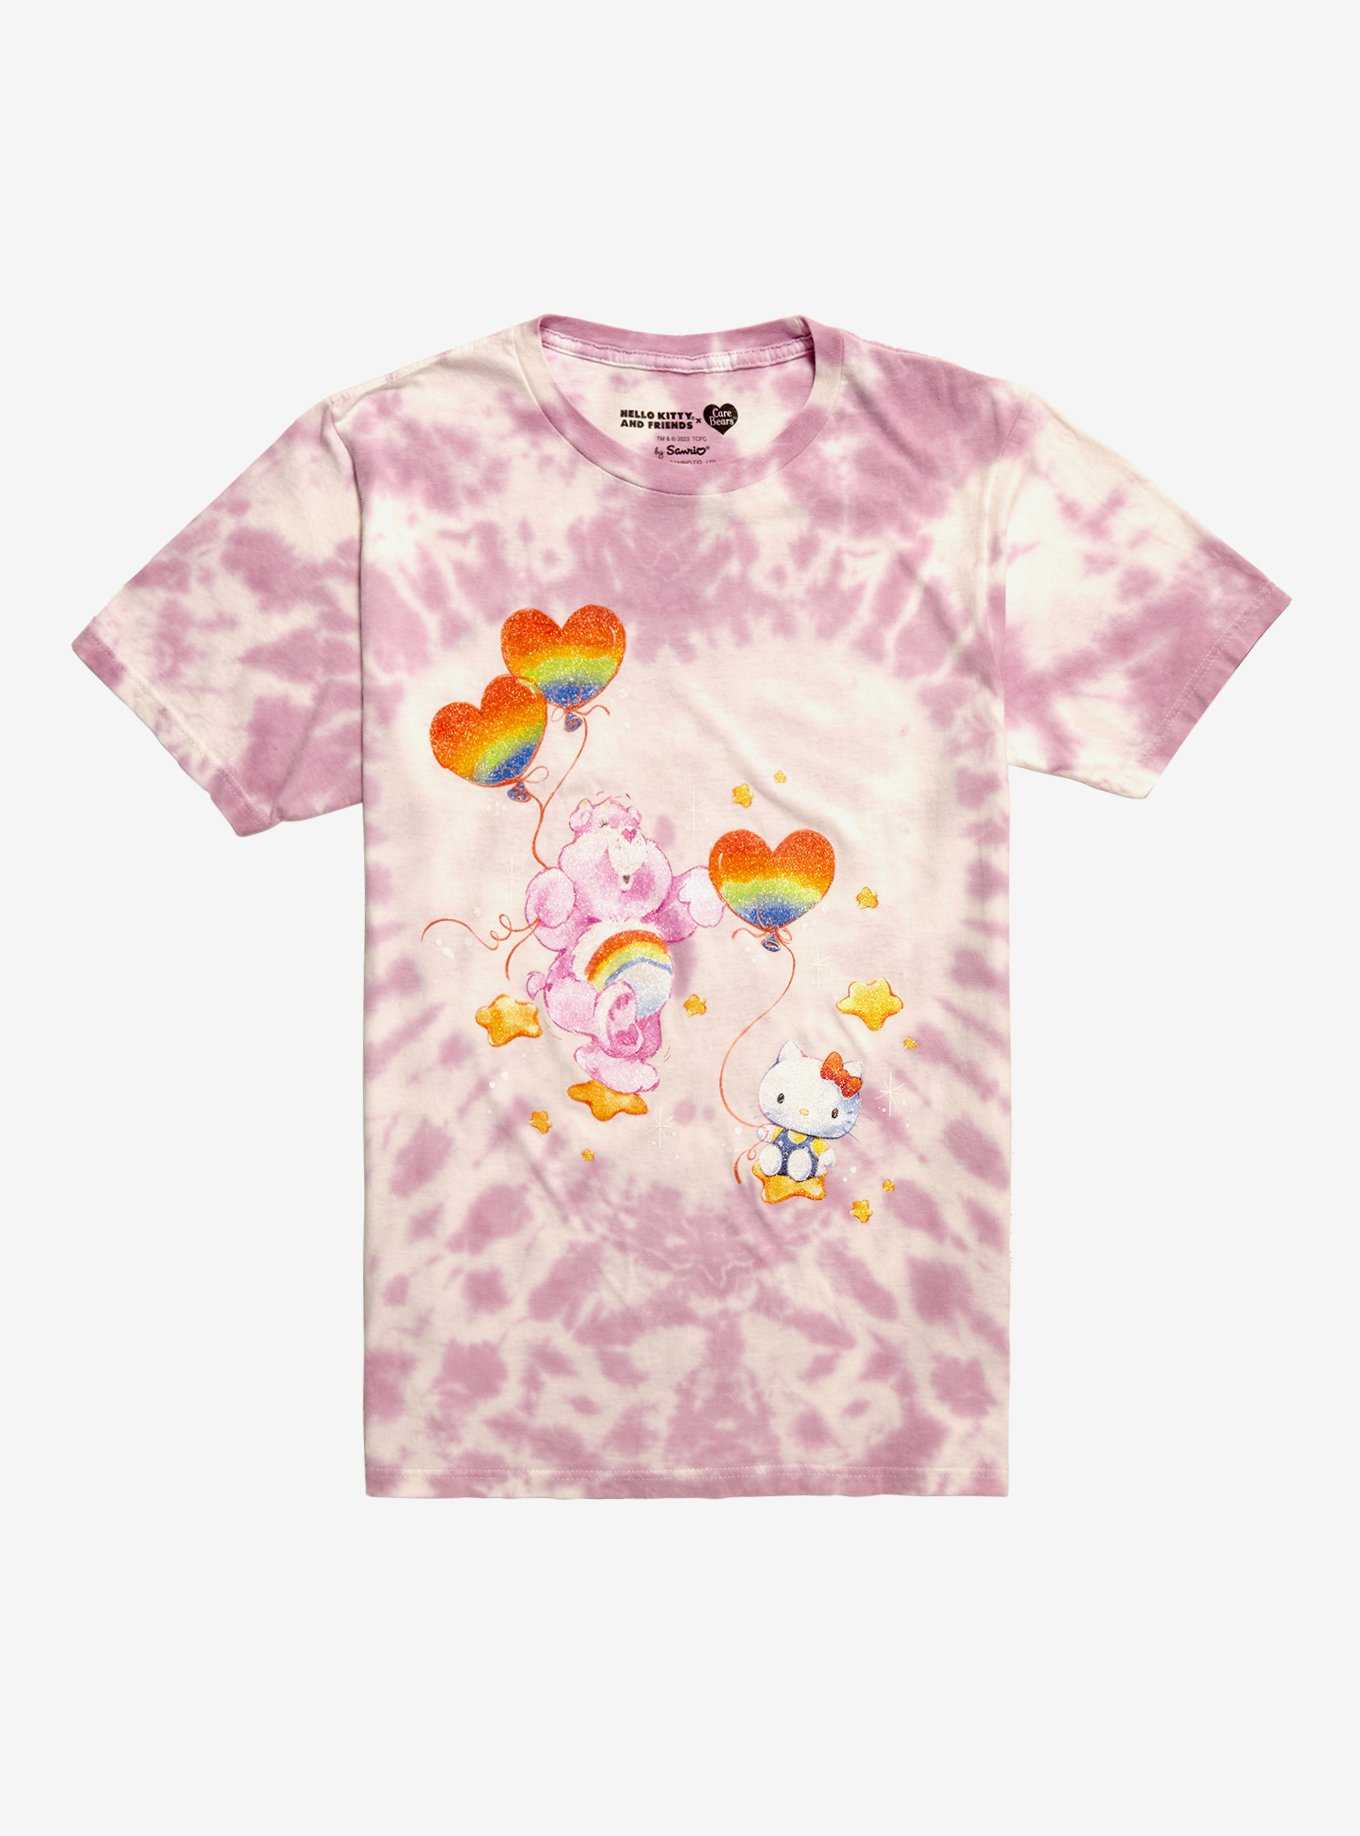 Care Bears X Hello Kitty And Friends Heart Balloons Glitter Boyfriend Fit Girls T-Shirt, , hi-res